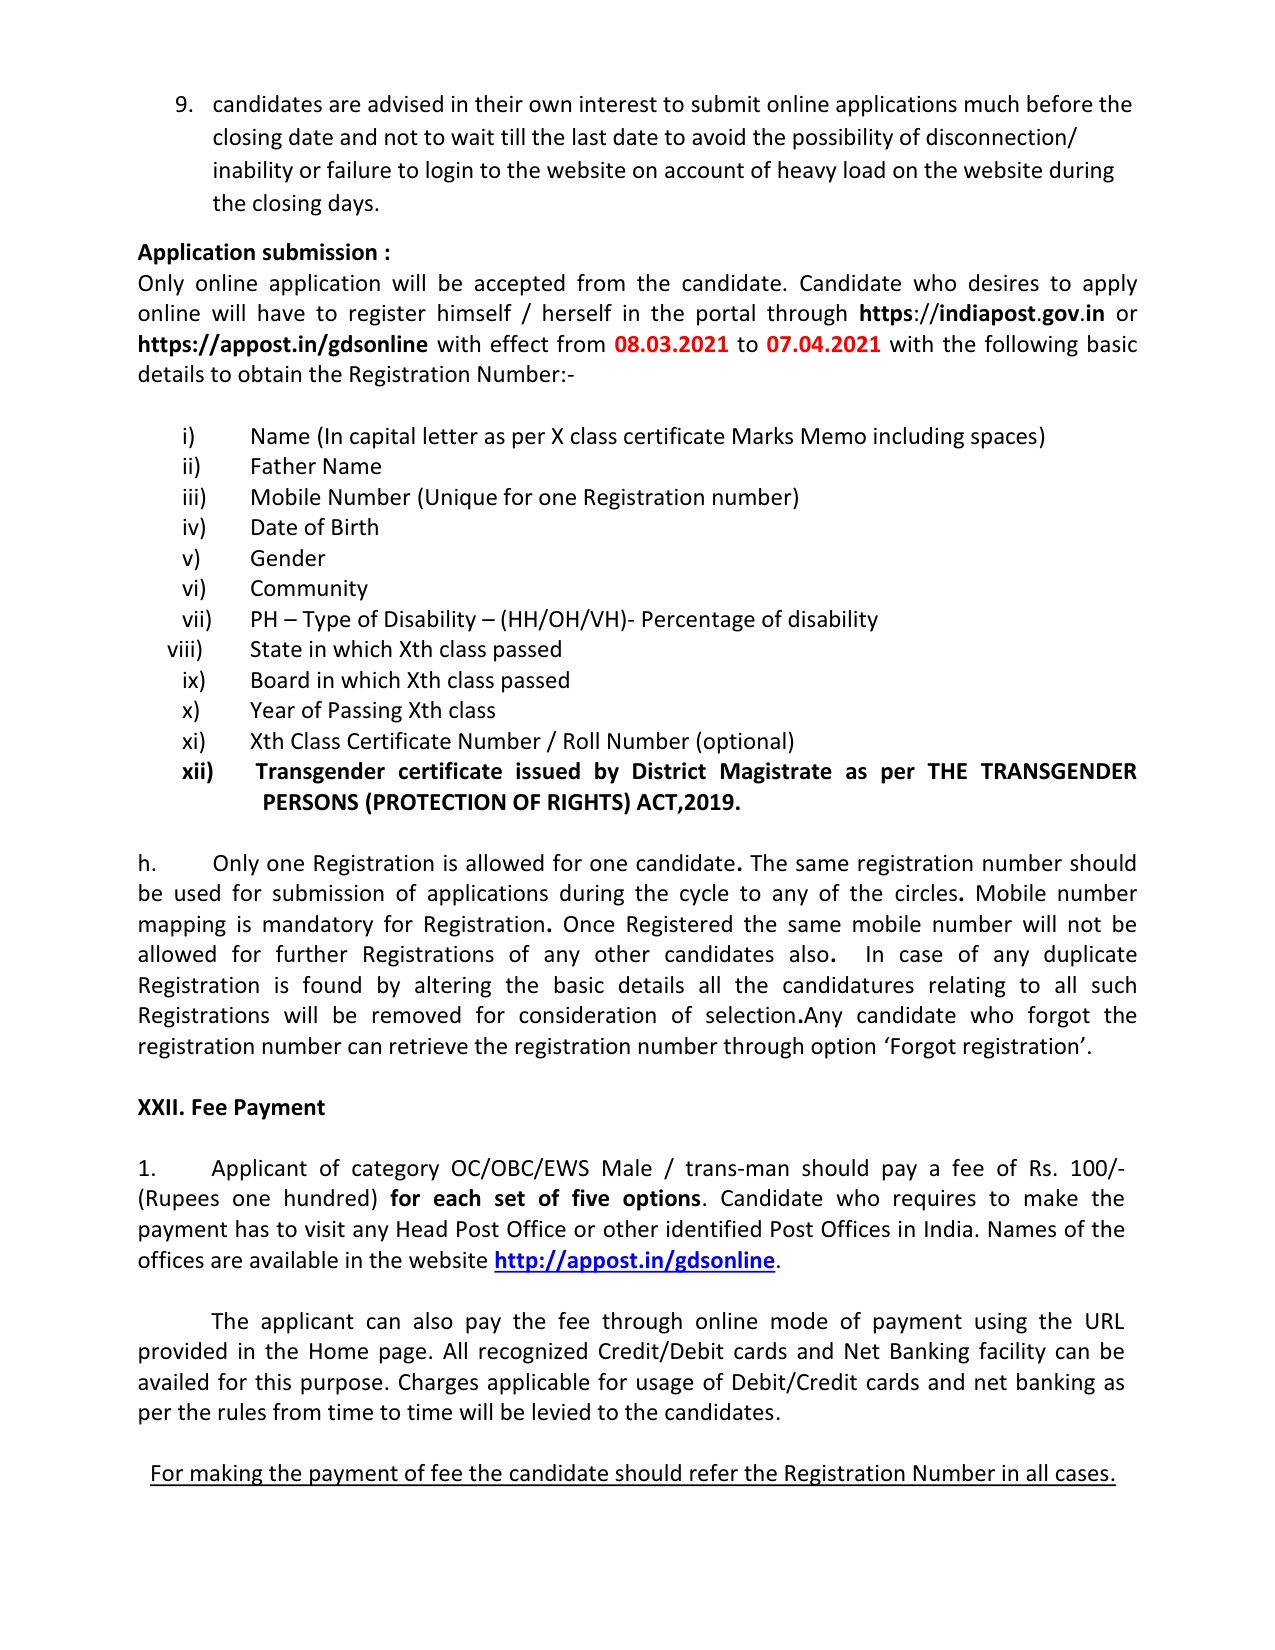 Kerala Postal Circle GDS Recruitment 2021 notification - Notification Image 12